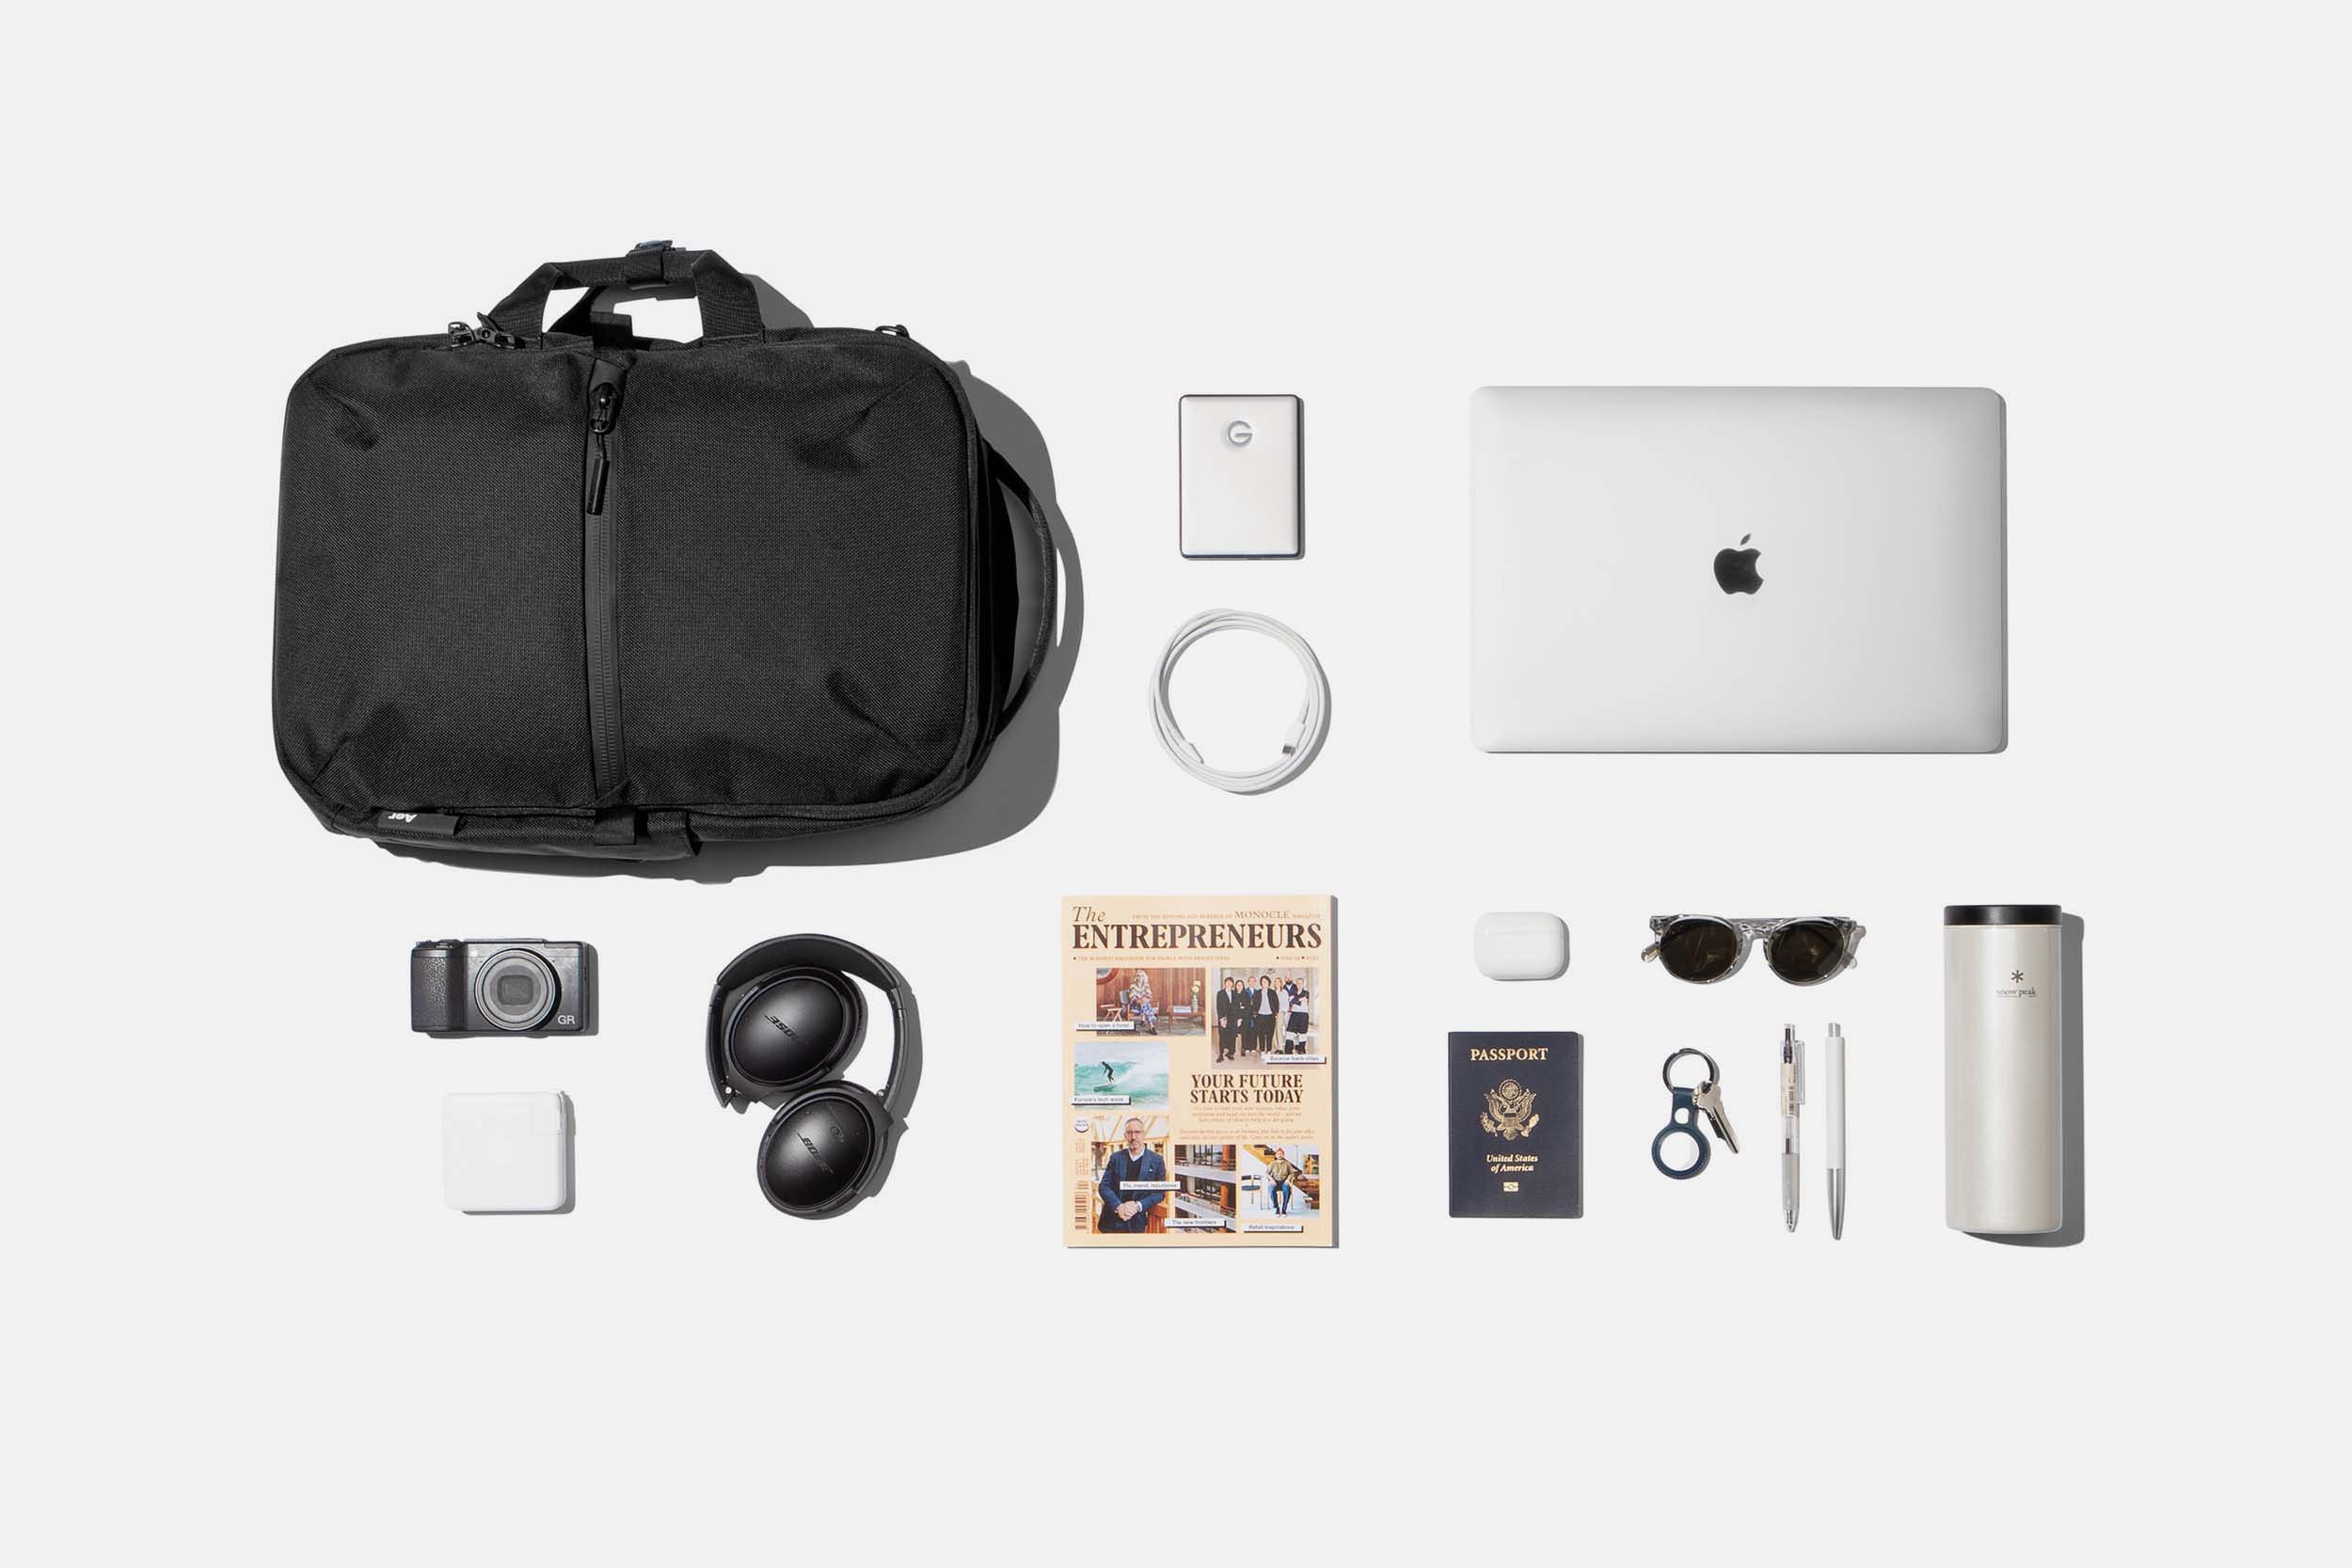 Flight Pack 3 - Black — Aer | Modern gym bags, travel backpacks 